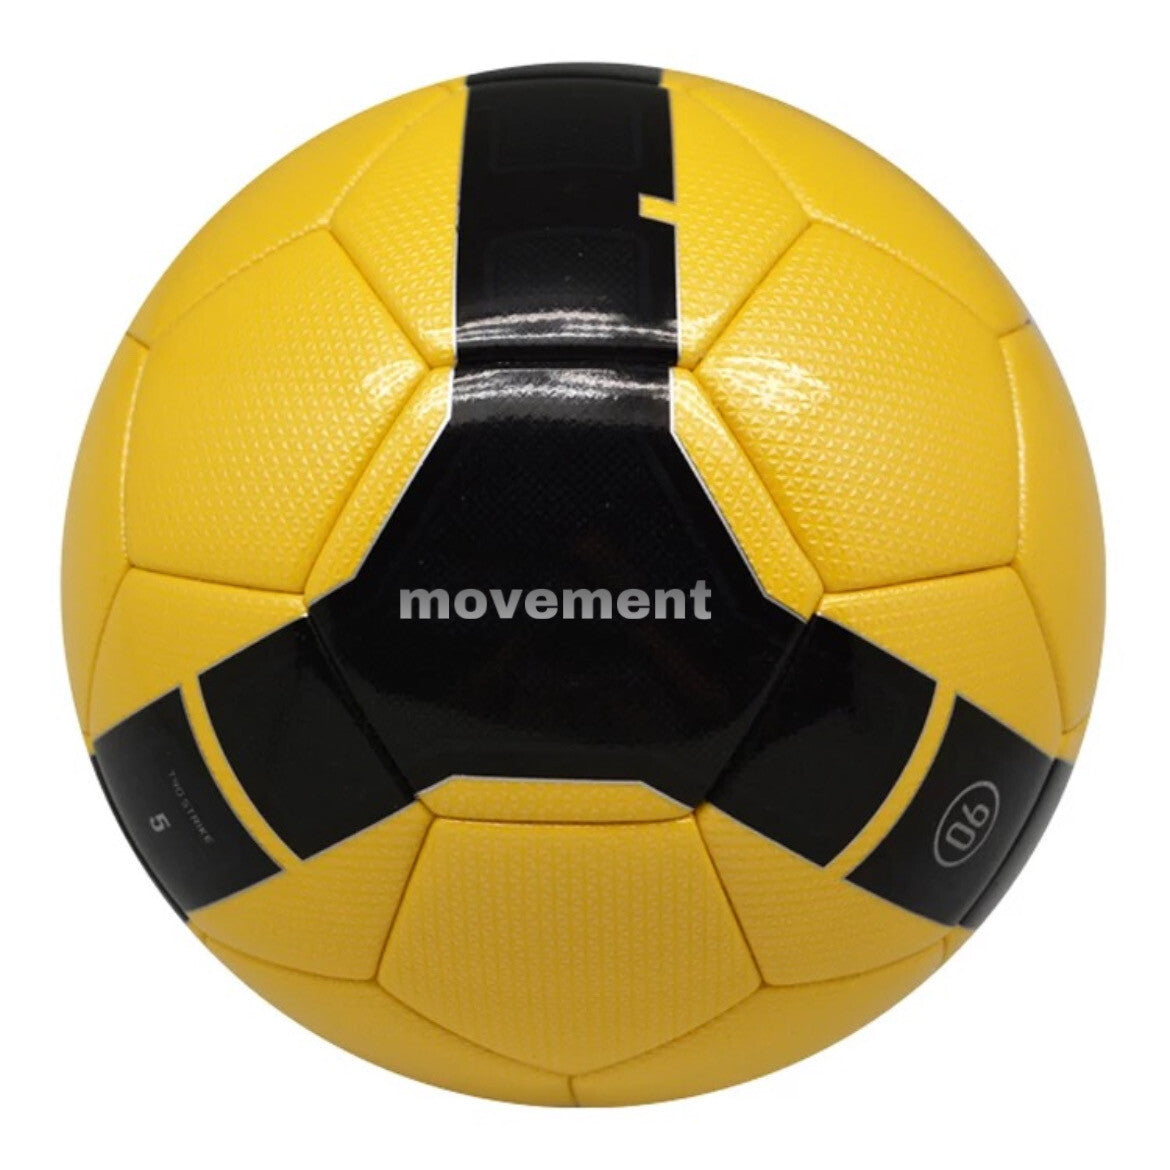 Movement Football